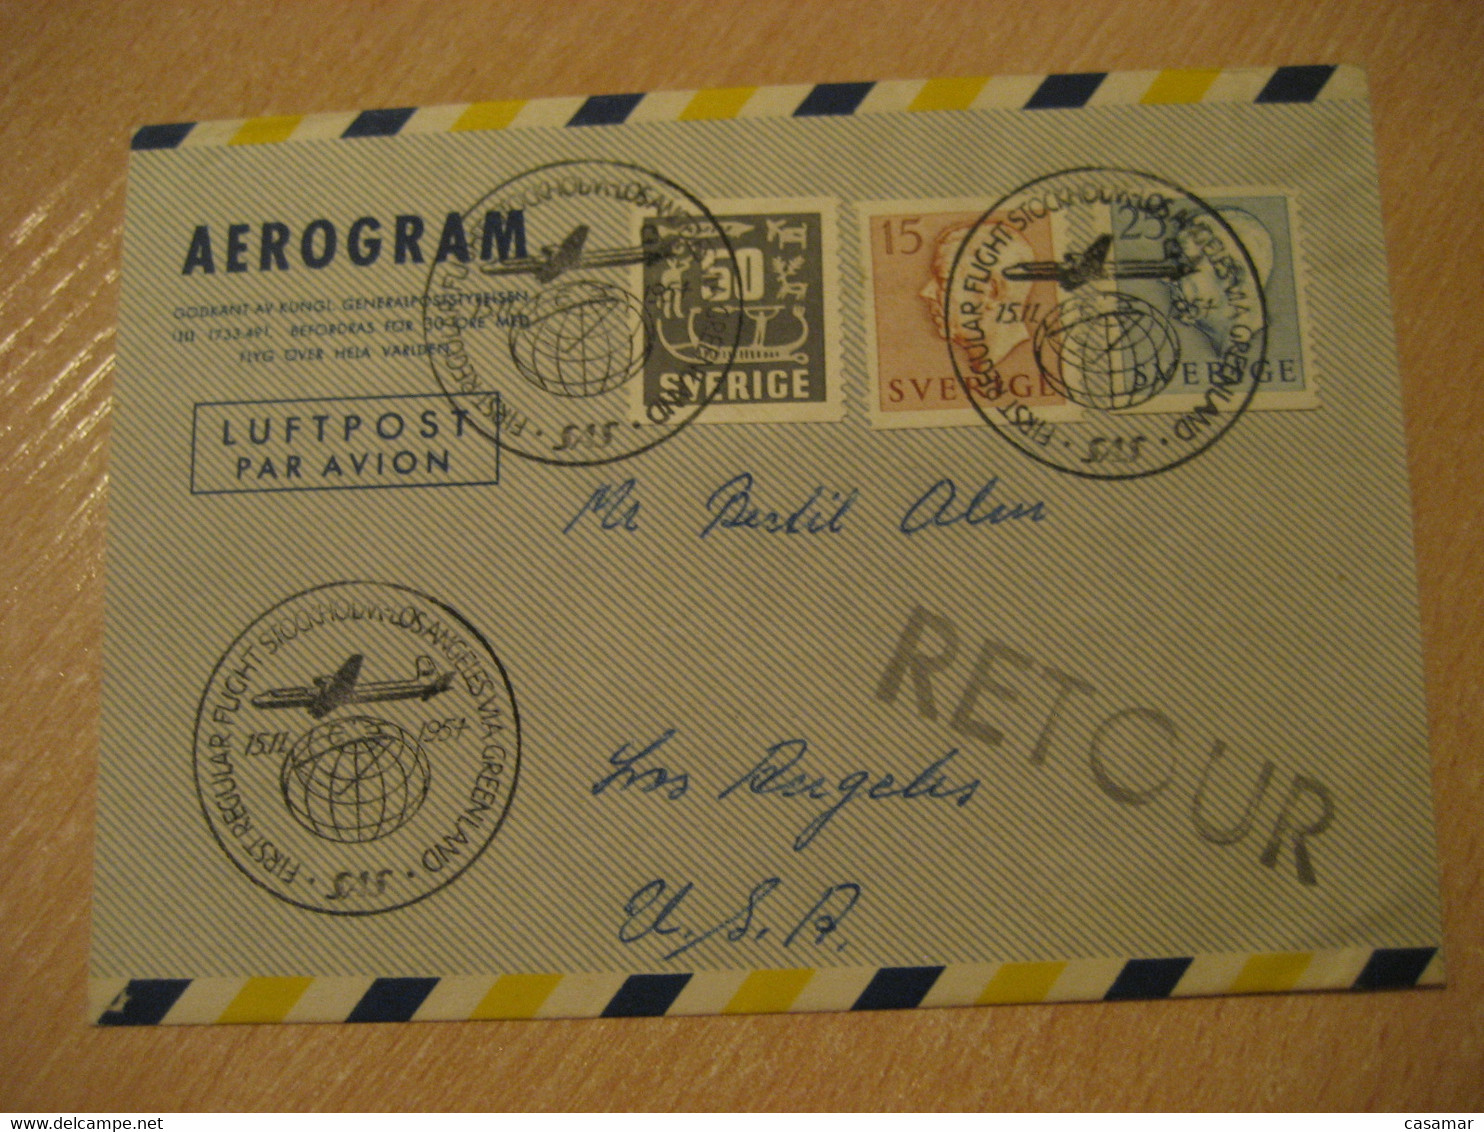 Stockholm Los Angeles VIA GREENLAND 1954 SAS Scandinavian Airlines First Flight Cancel Aerogramme USA SWEDEN DENMARK - Cartas & Documentos